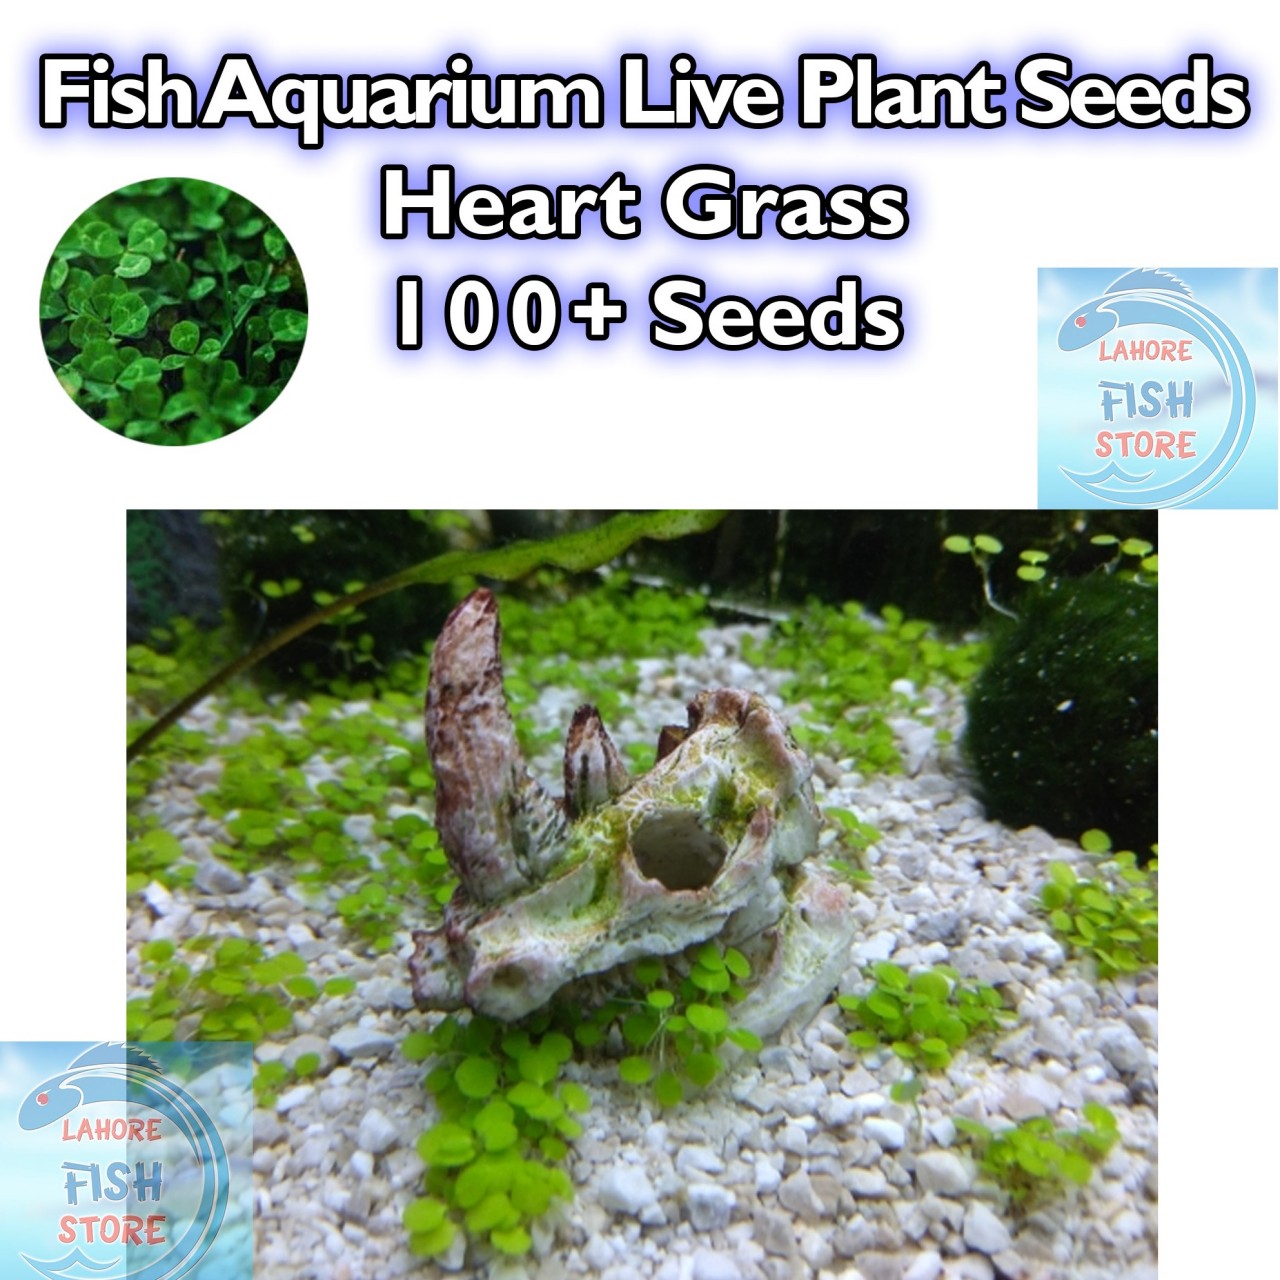 Fish Aquarium Live Plant Seeds - Heart Grass - 100+ Seeds